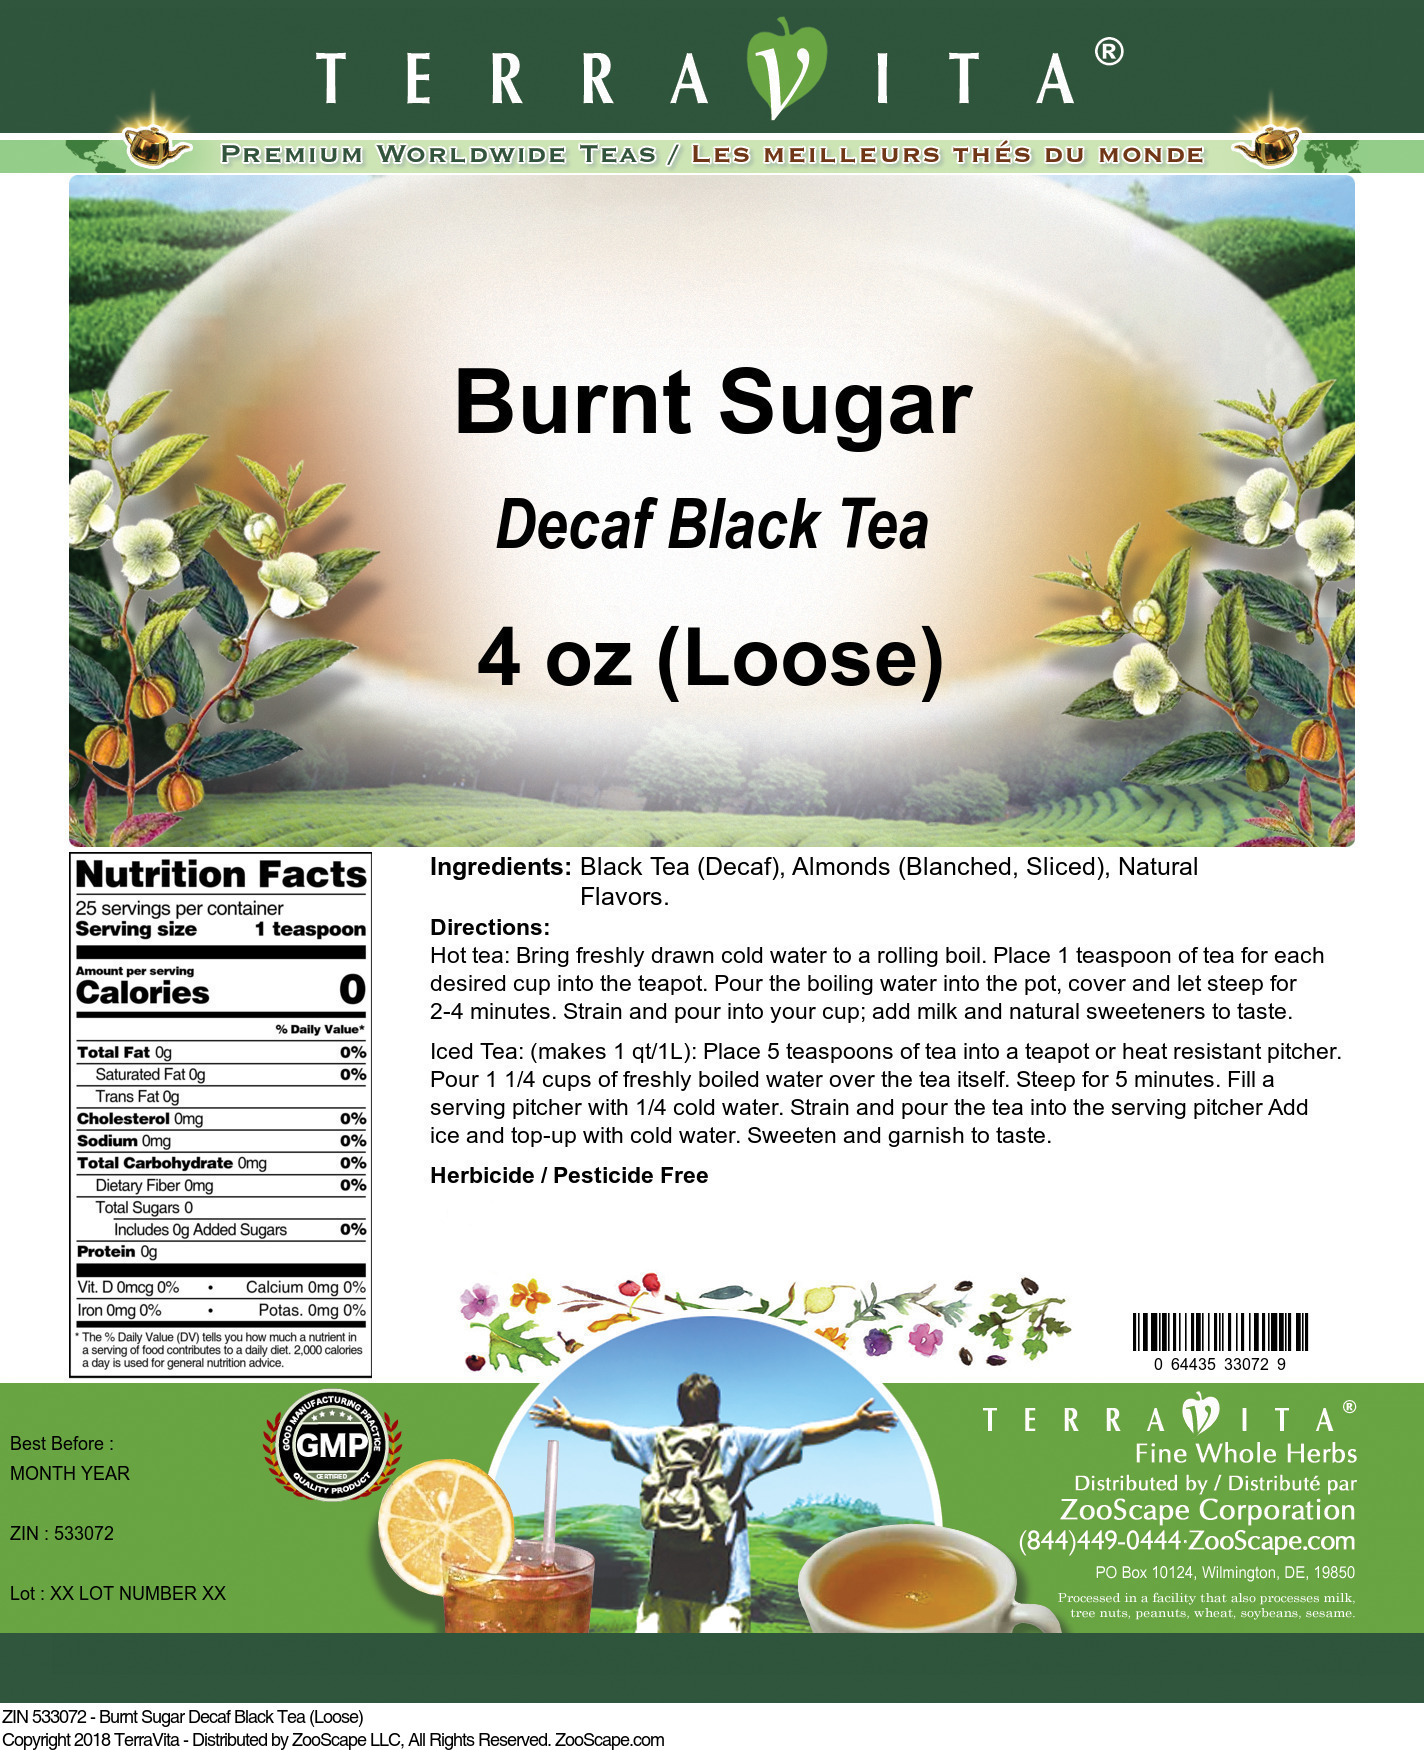 Burnt Sugar Decaf Black Tea (Loose) - Label